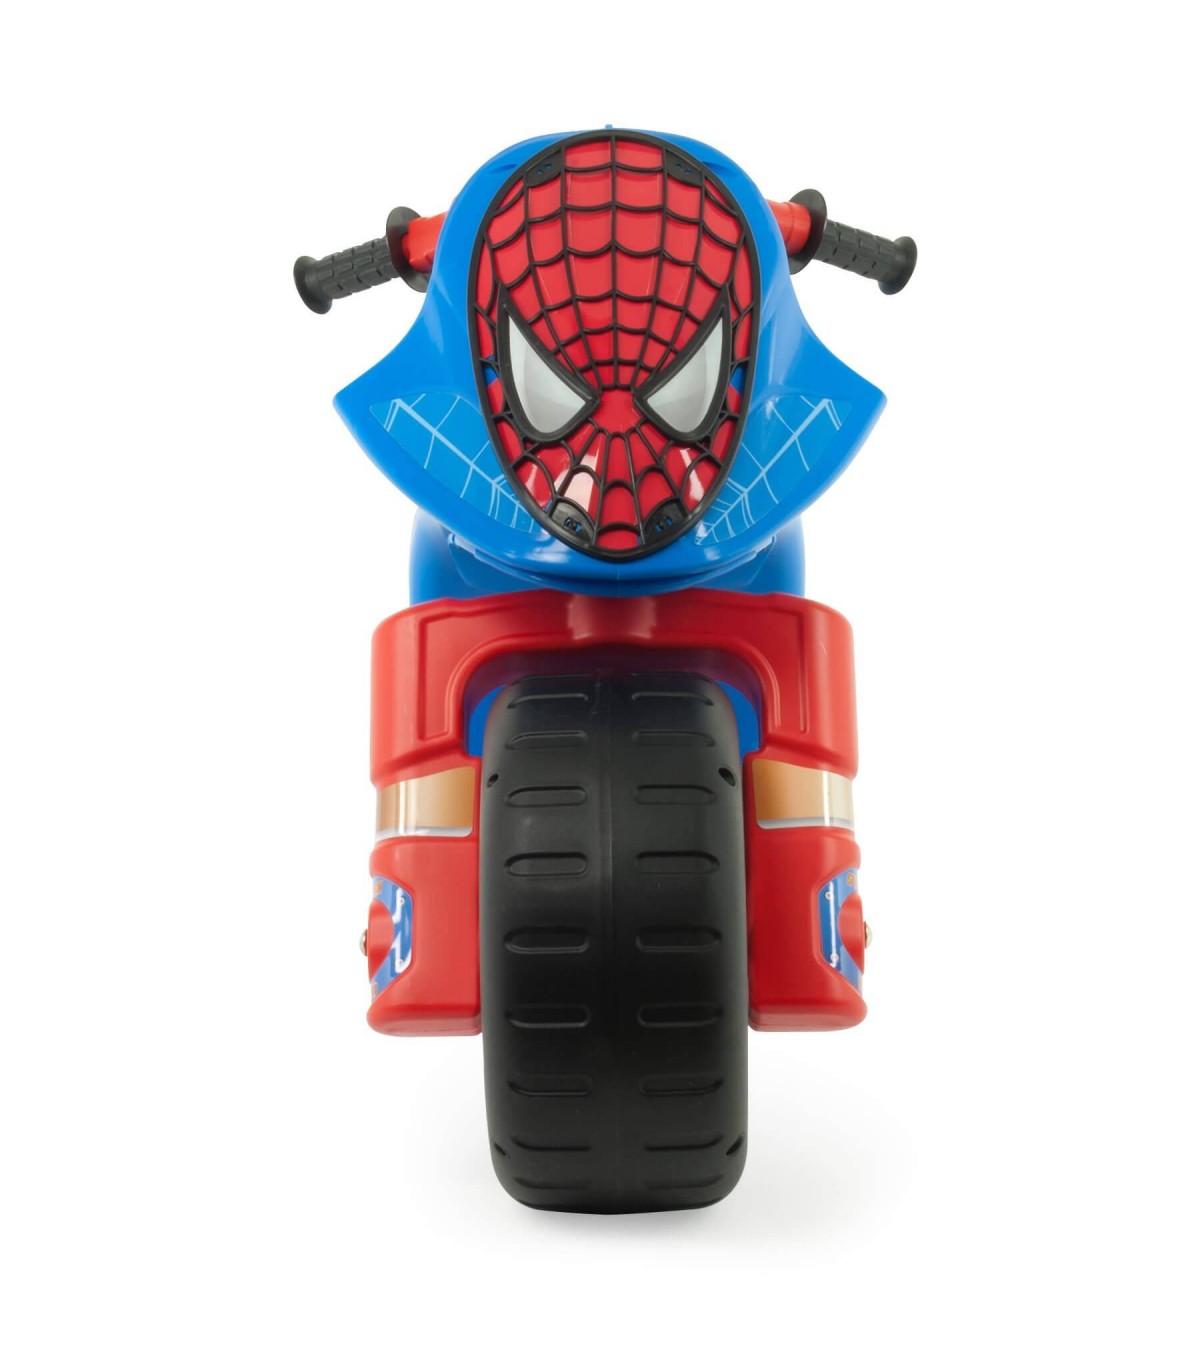 Moto Correpasillos Winner Spiderman, Juguetes Infantiles